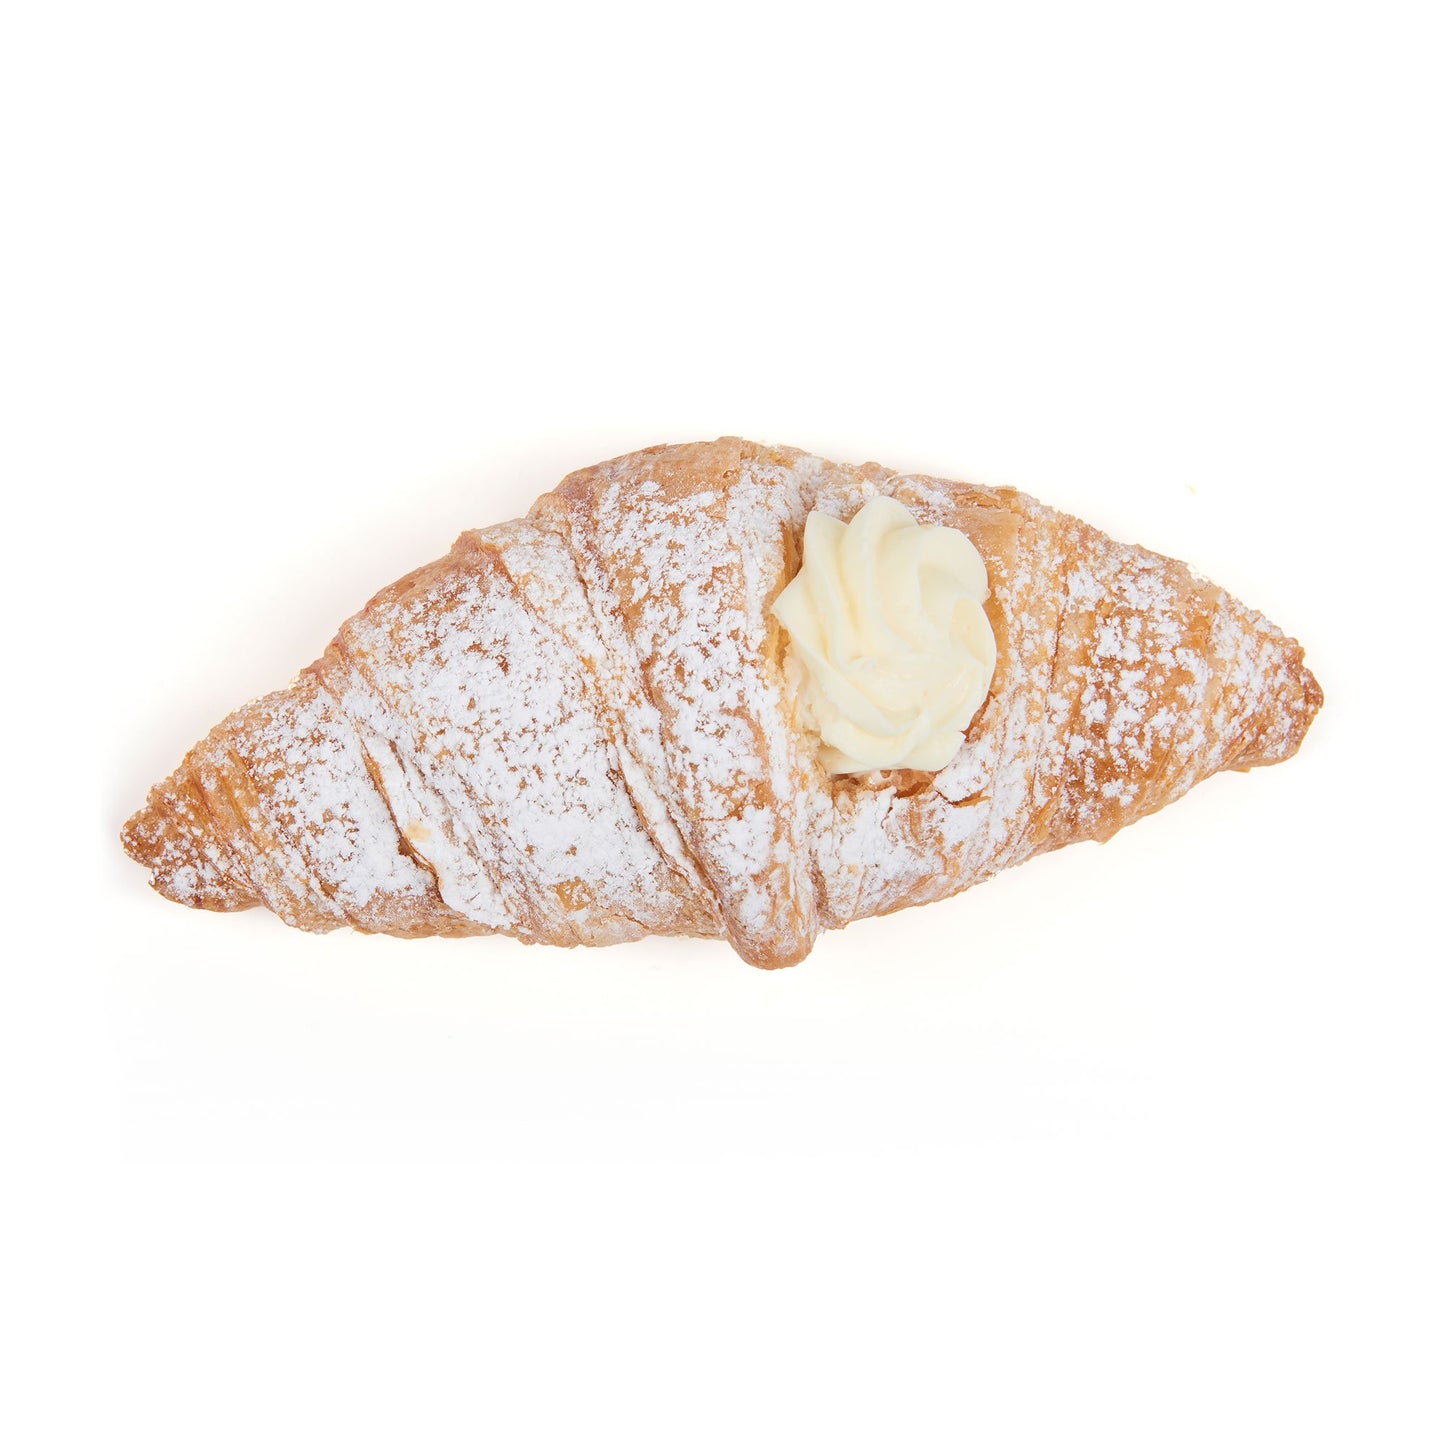 Croissant with Cream